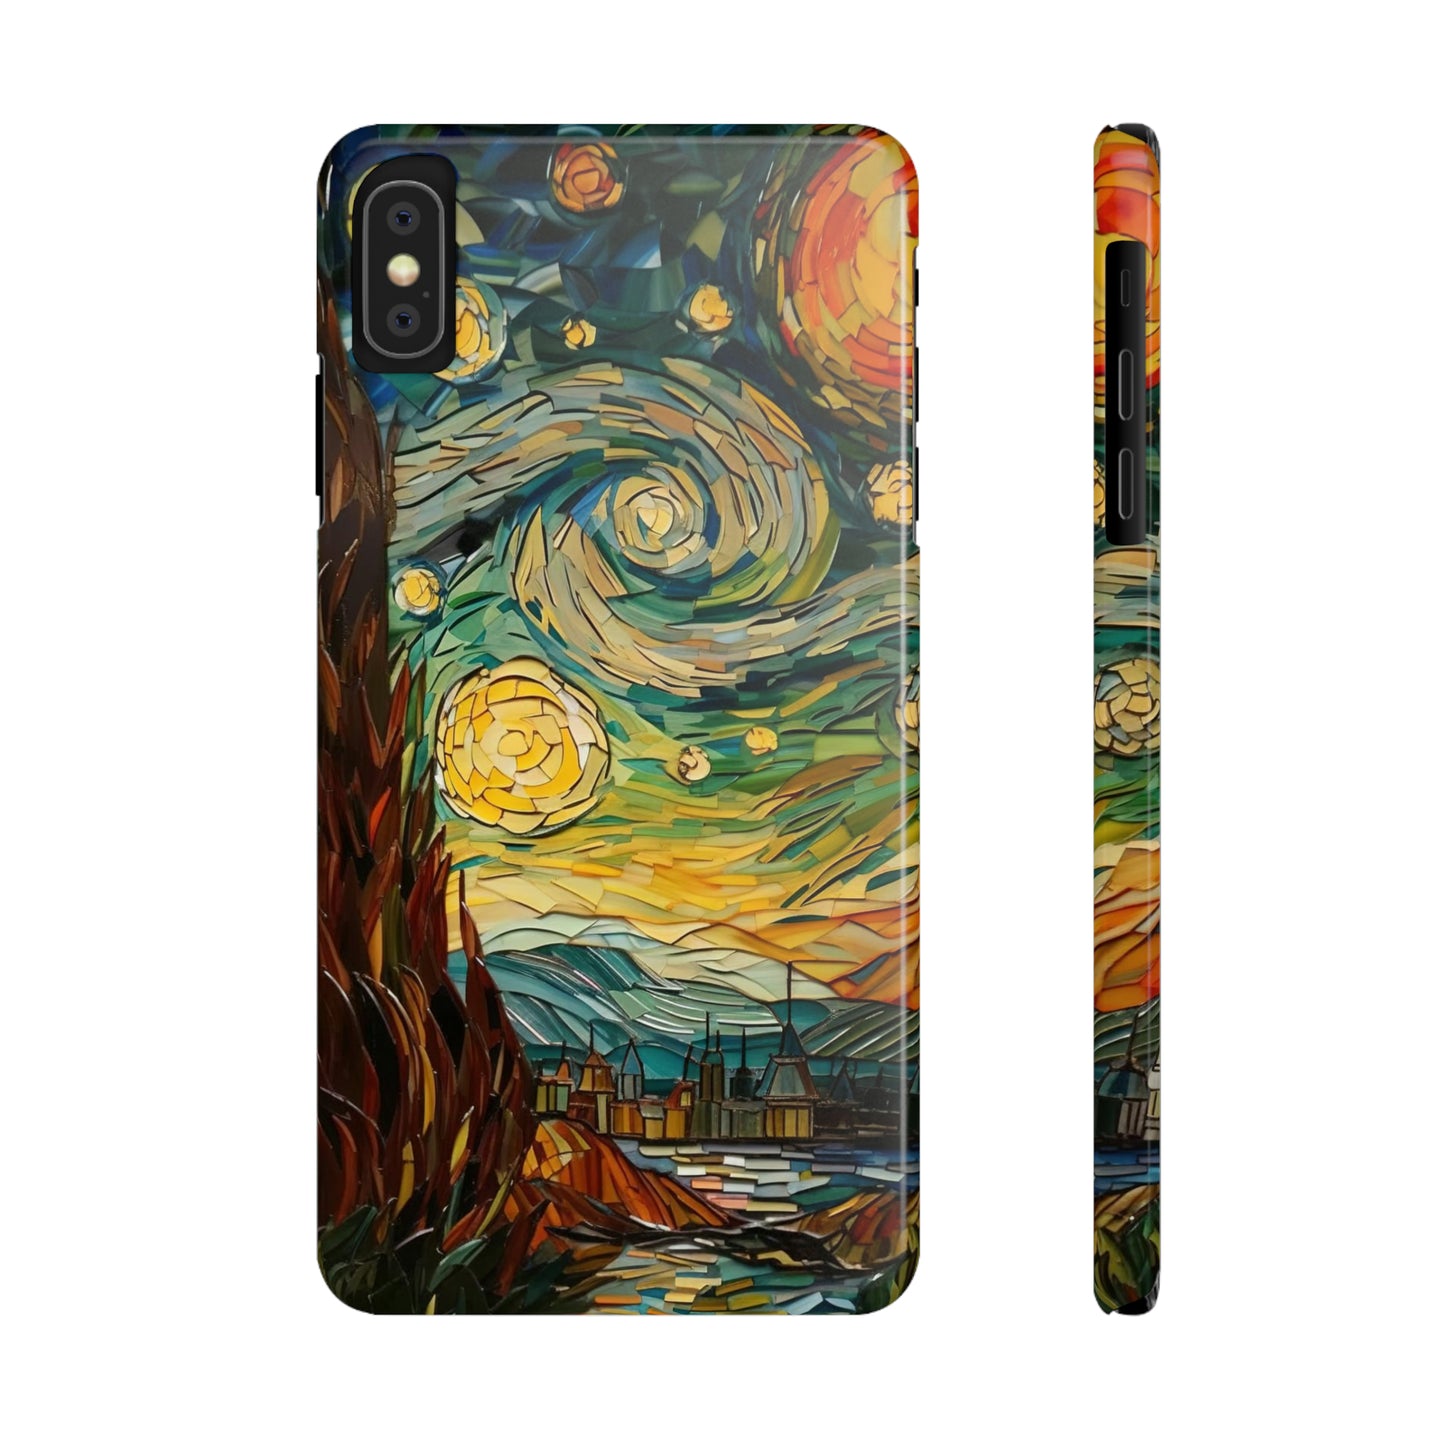 Landscape iPhone case